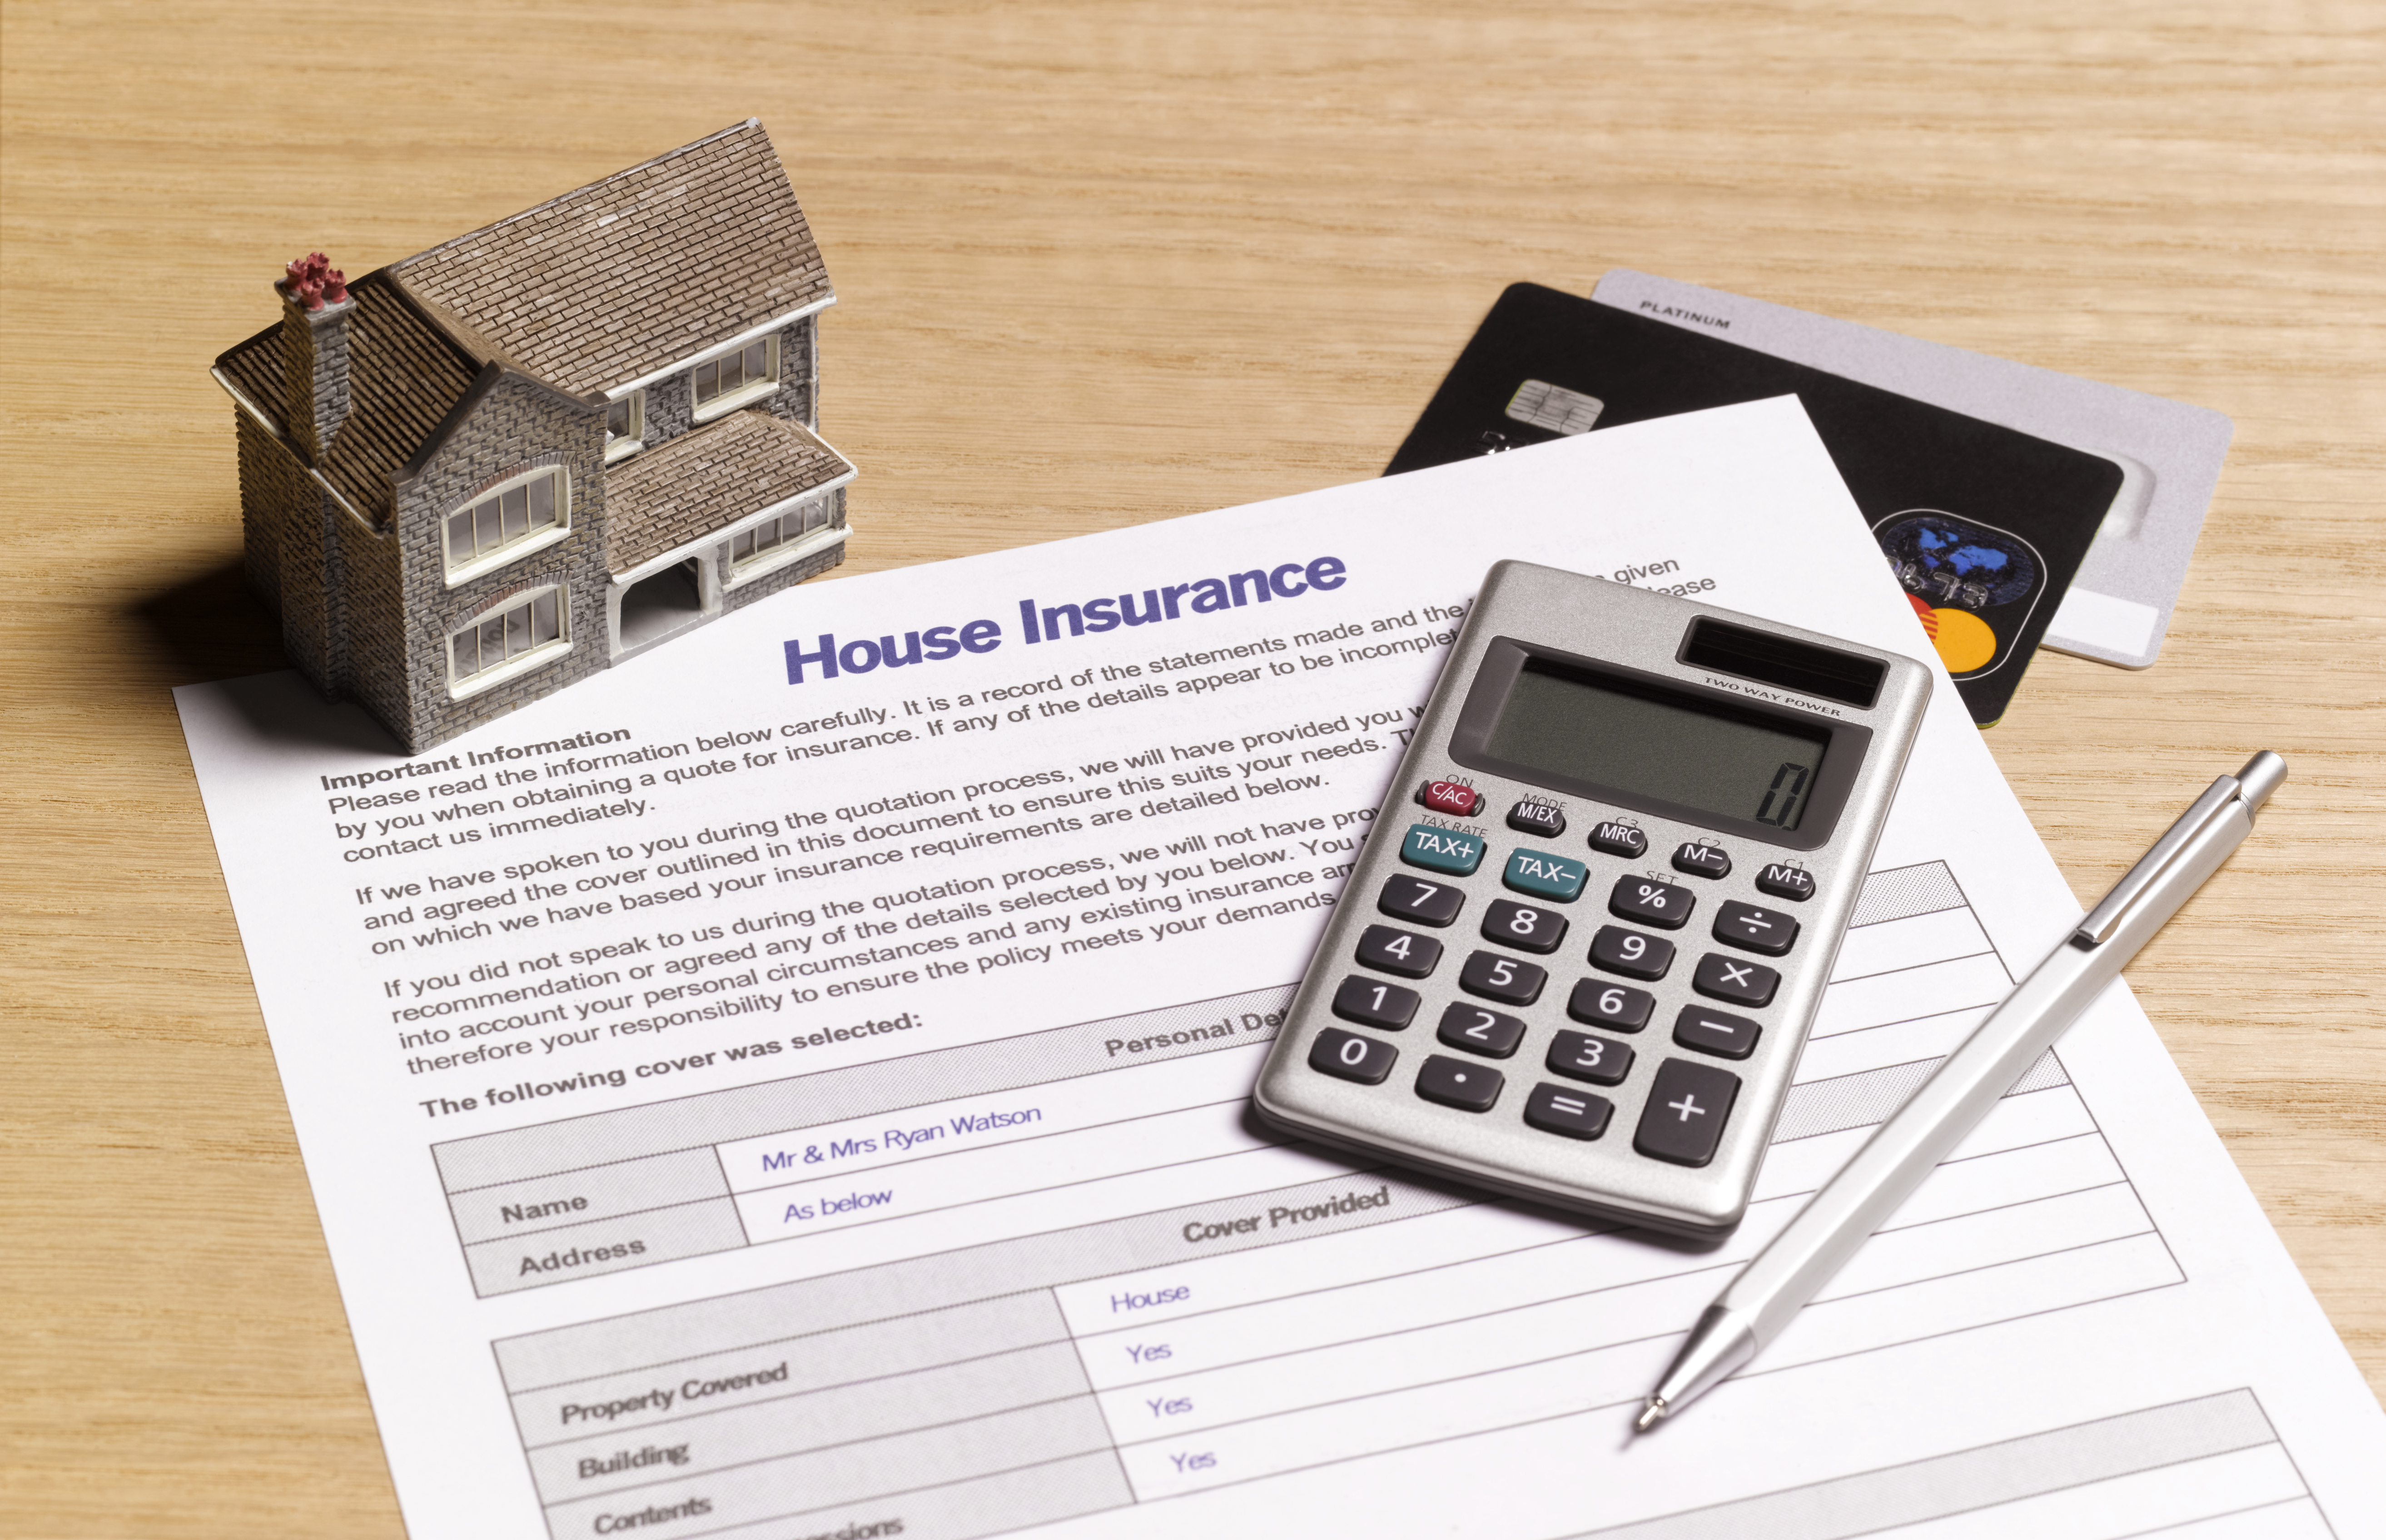 House insurance paperwork